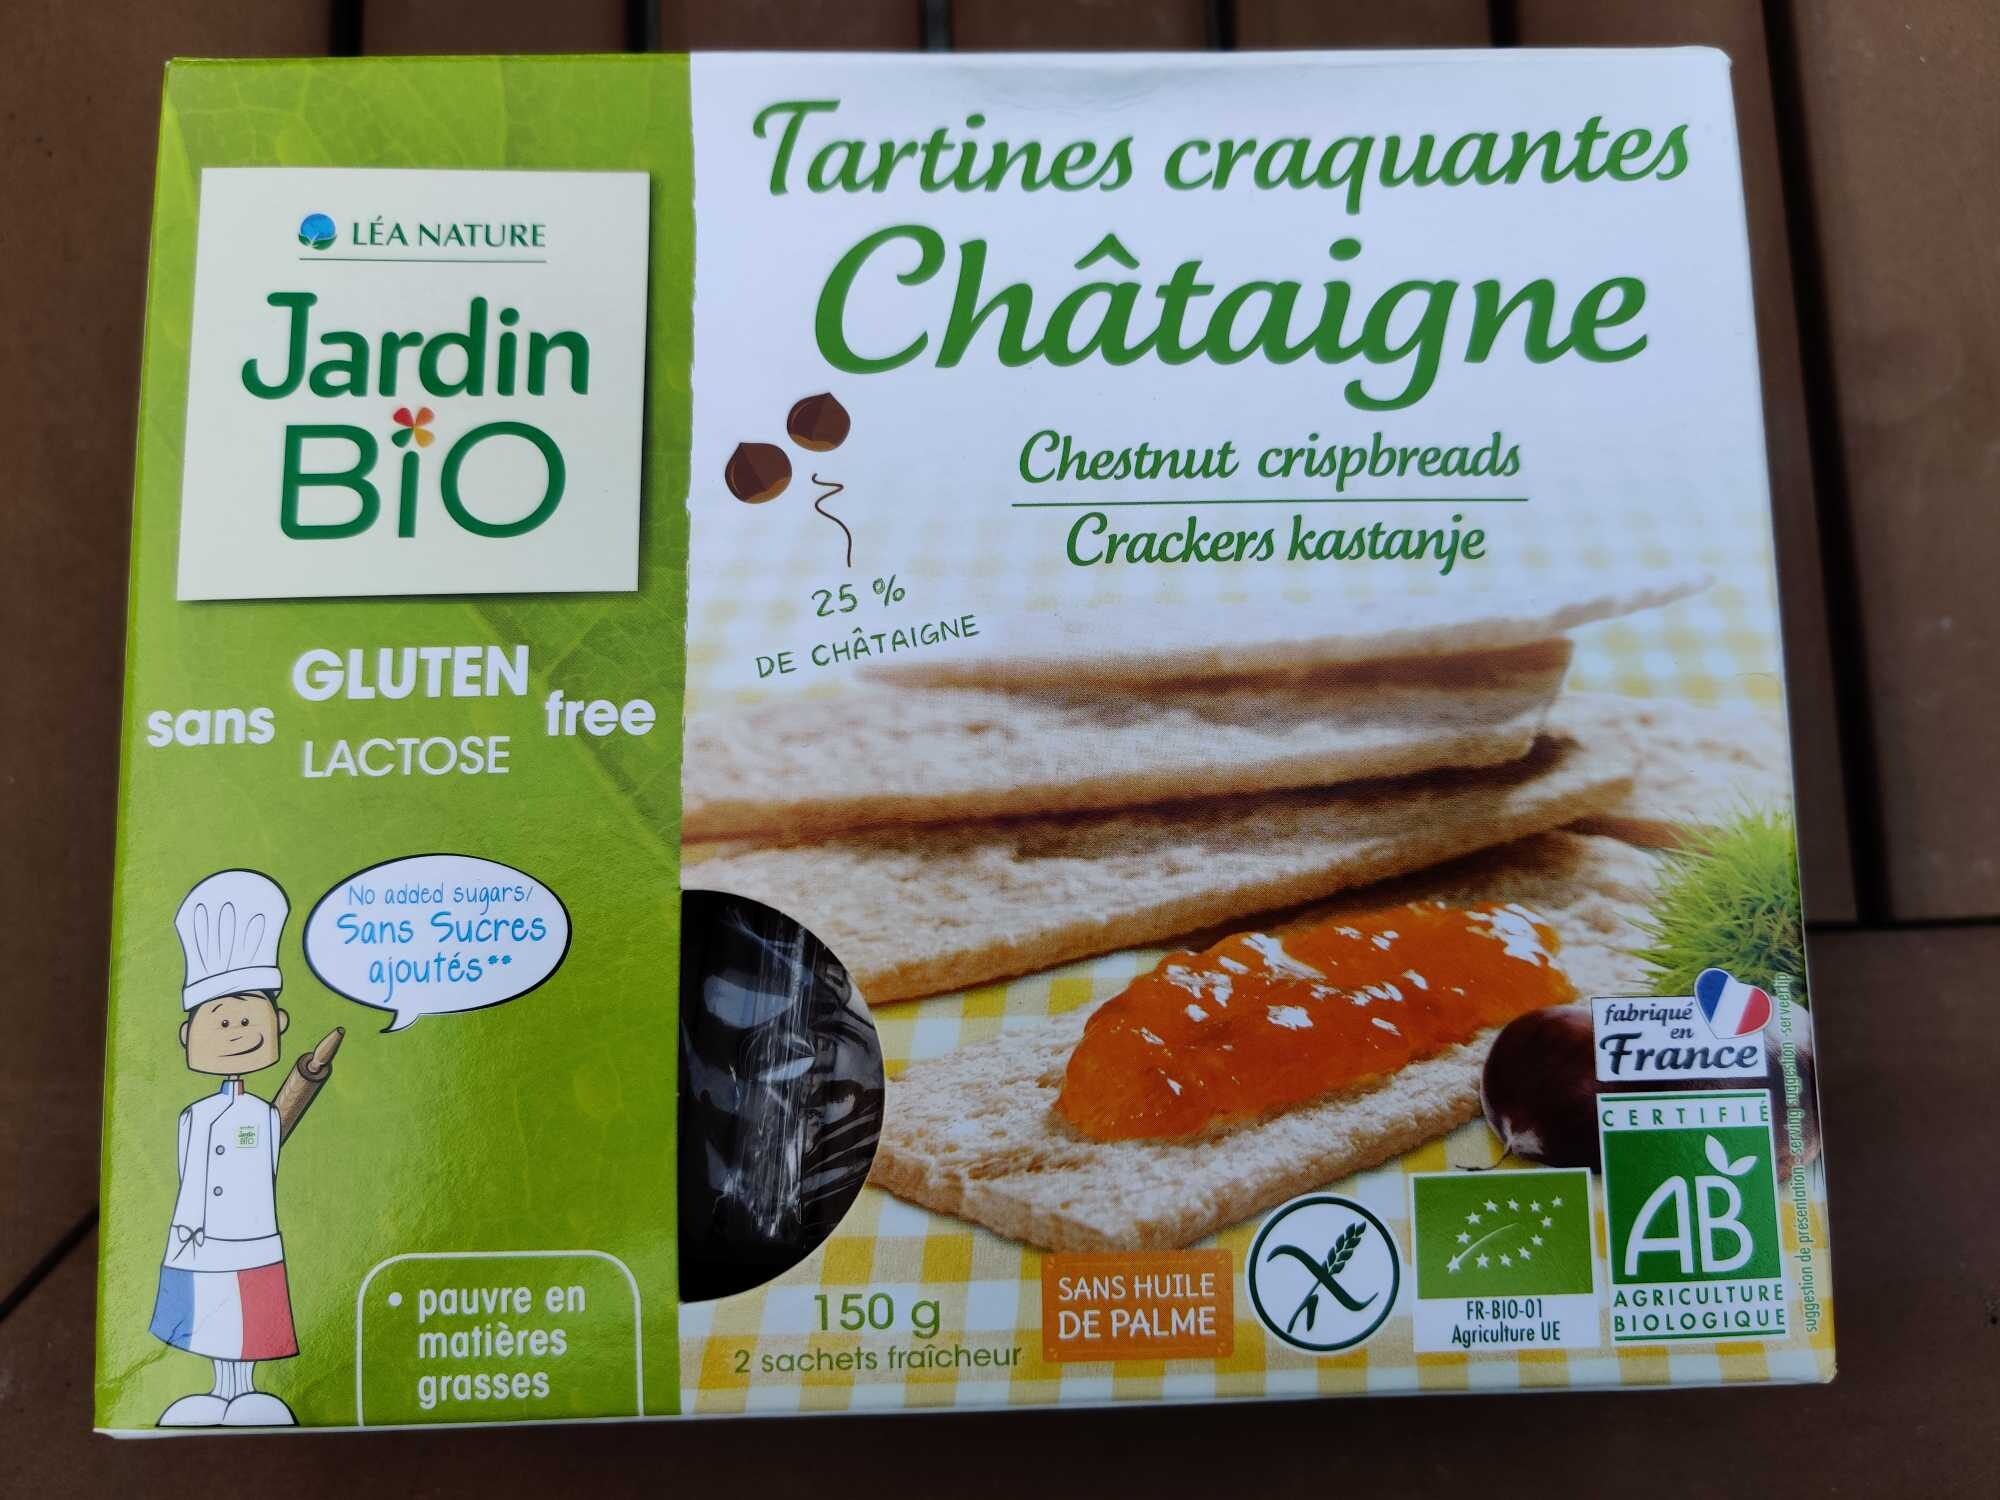 Tartines craquant es châtaigne - Produto - fr